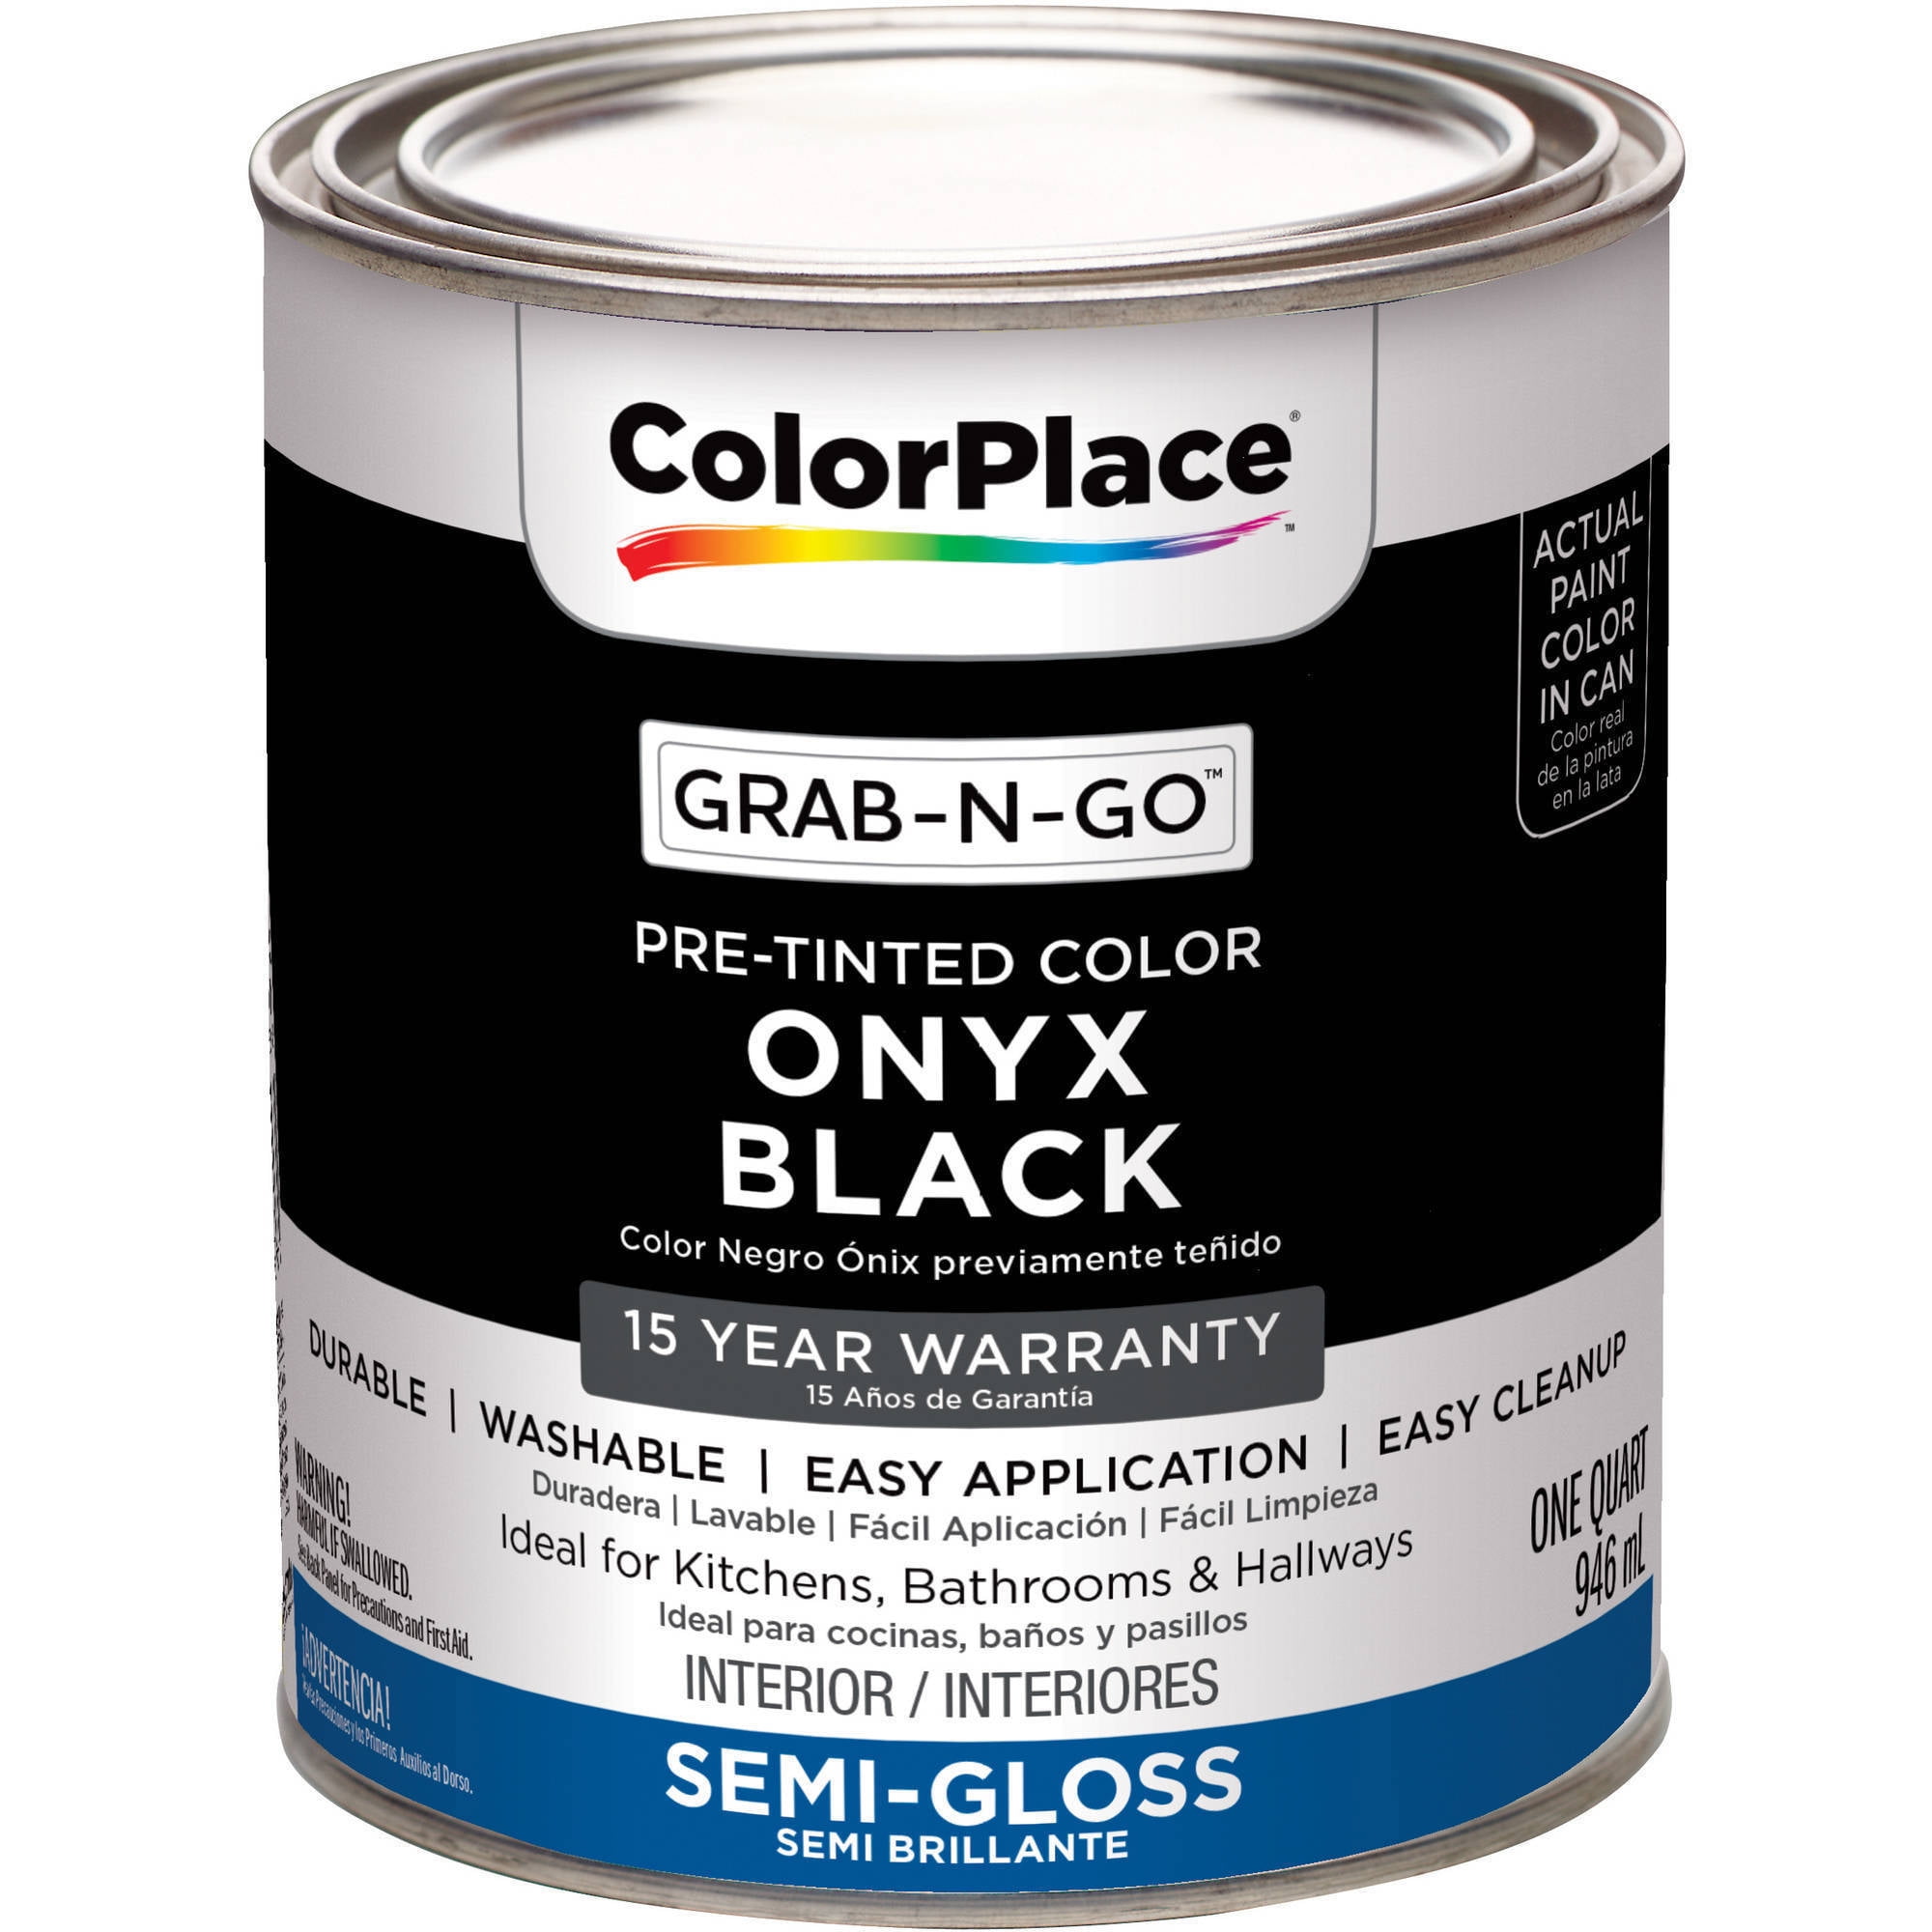 Colorplace Ready To Use Interior Paint Onyx Black 1 Quart Semi Gloss Walmart Com Walmart Com